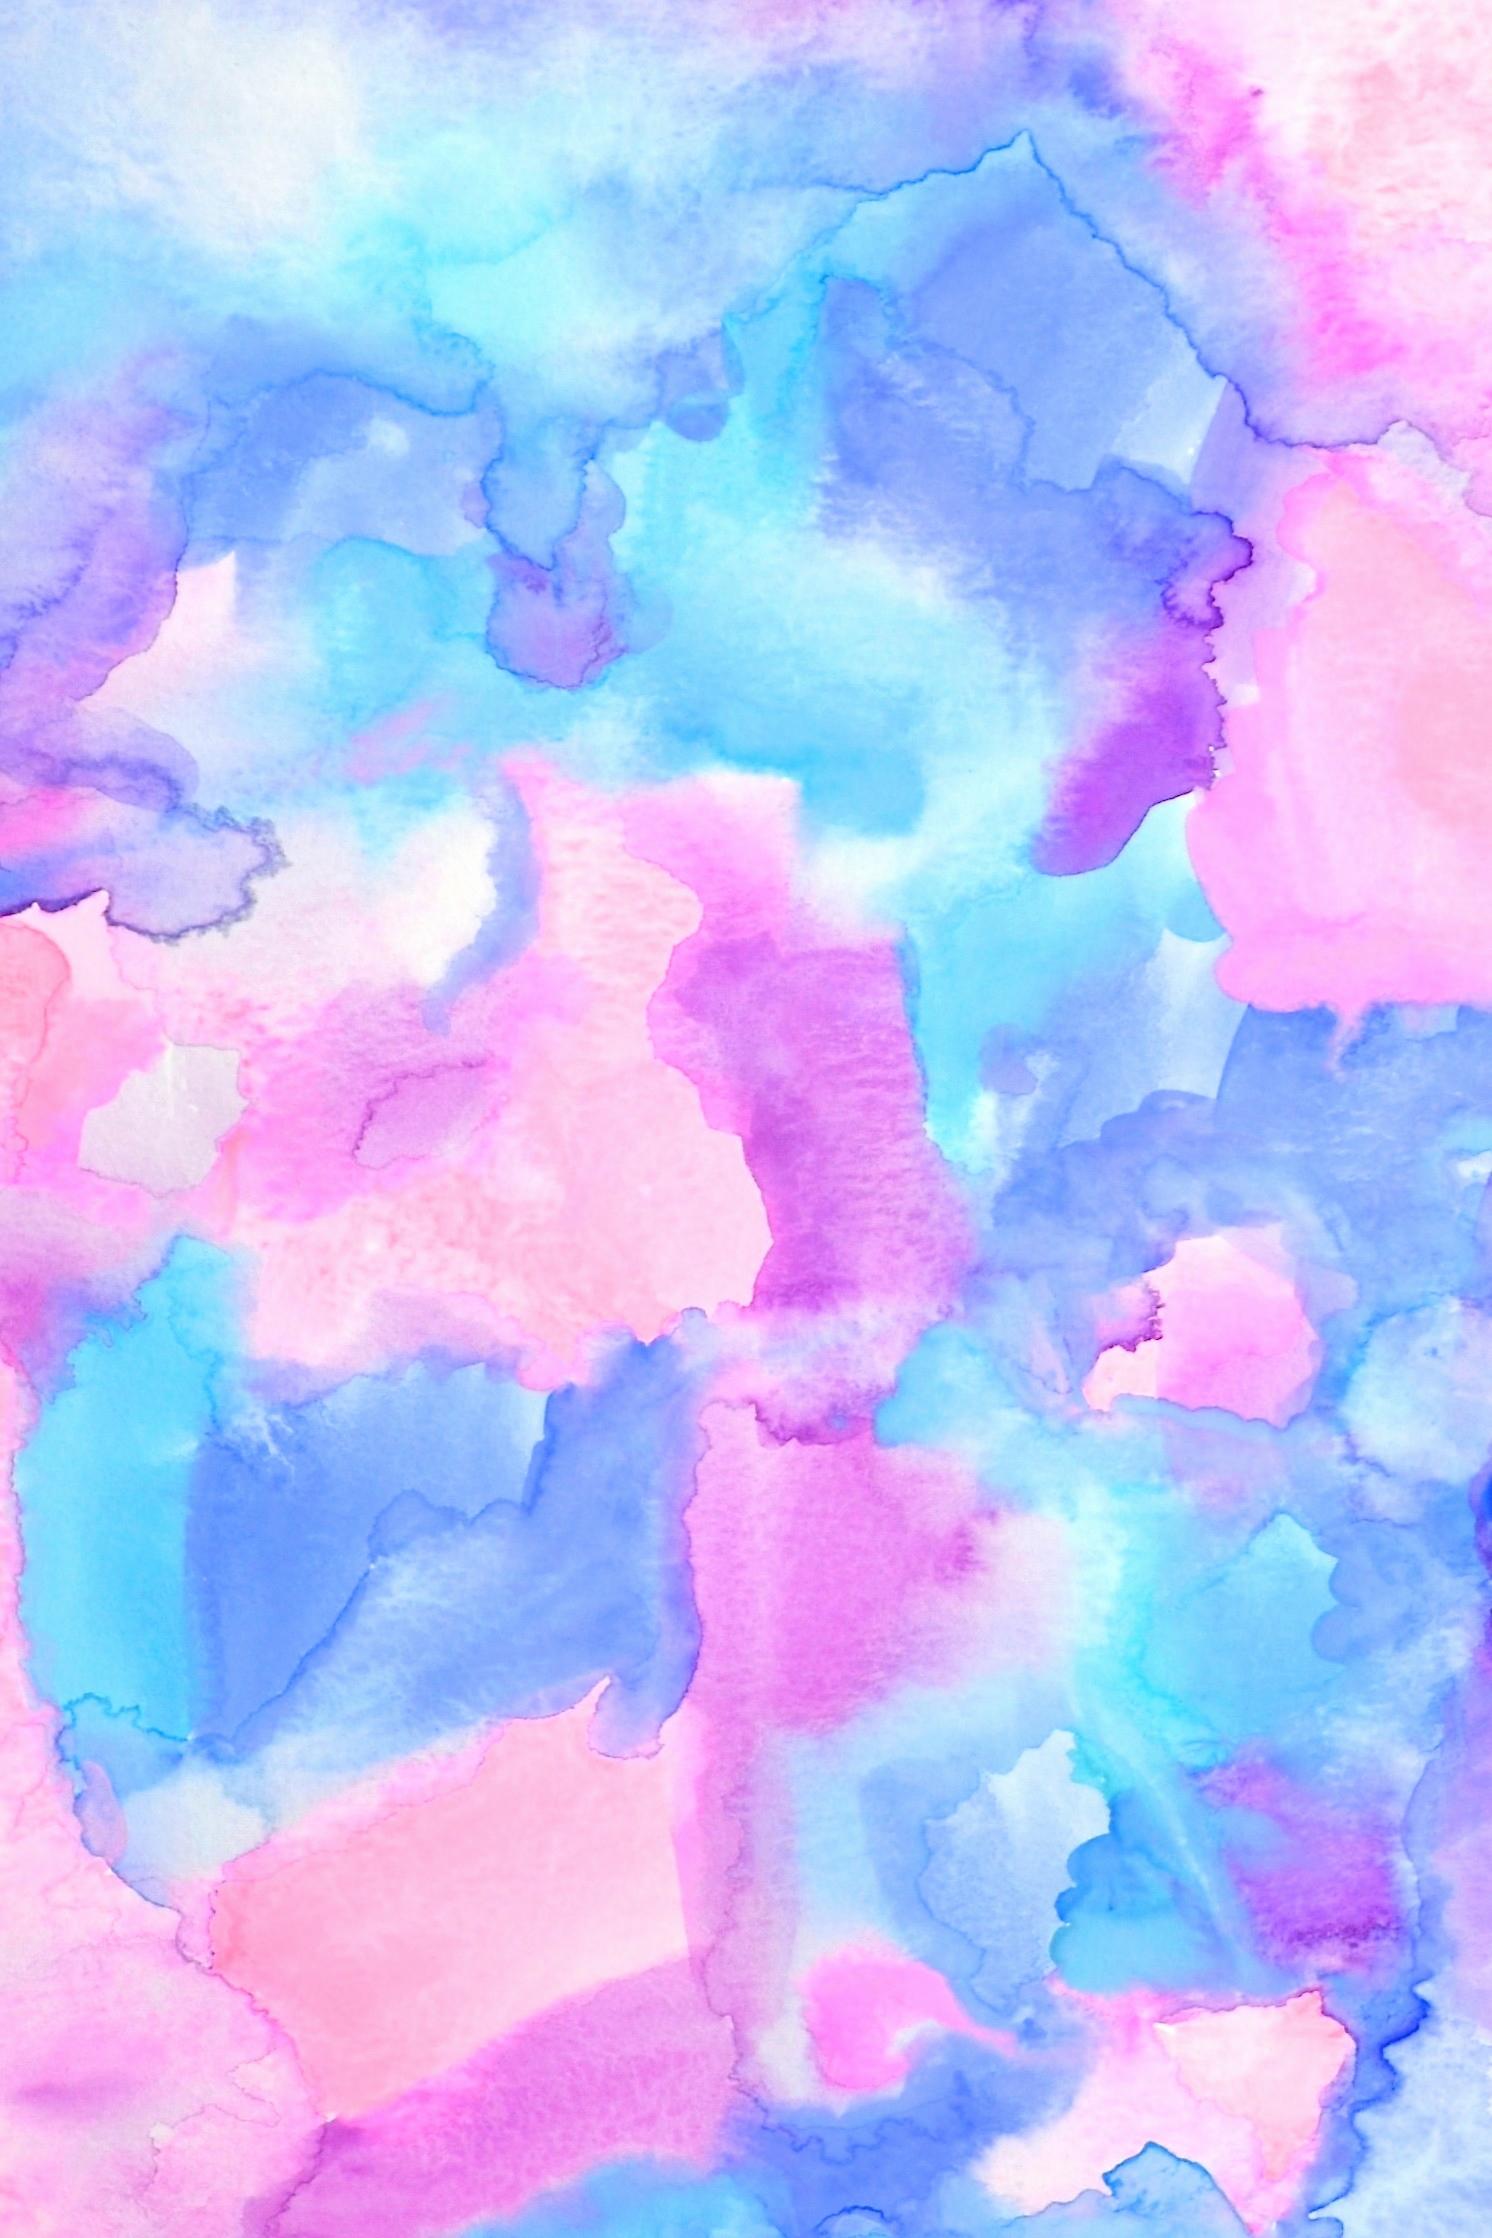 purple watercolor tumblr background